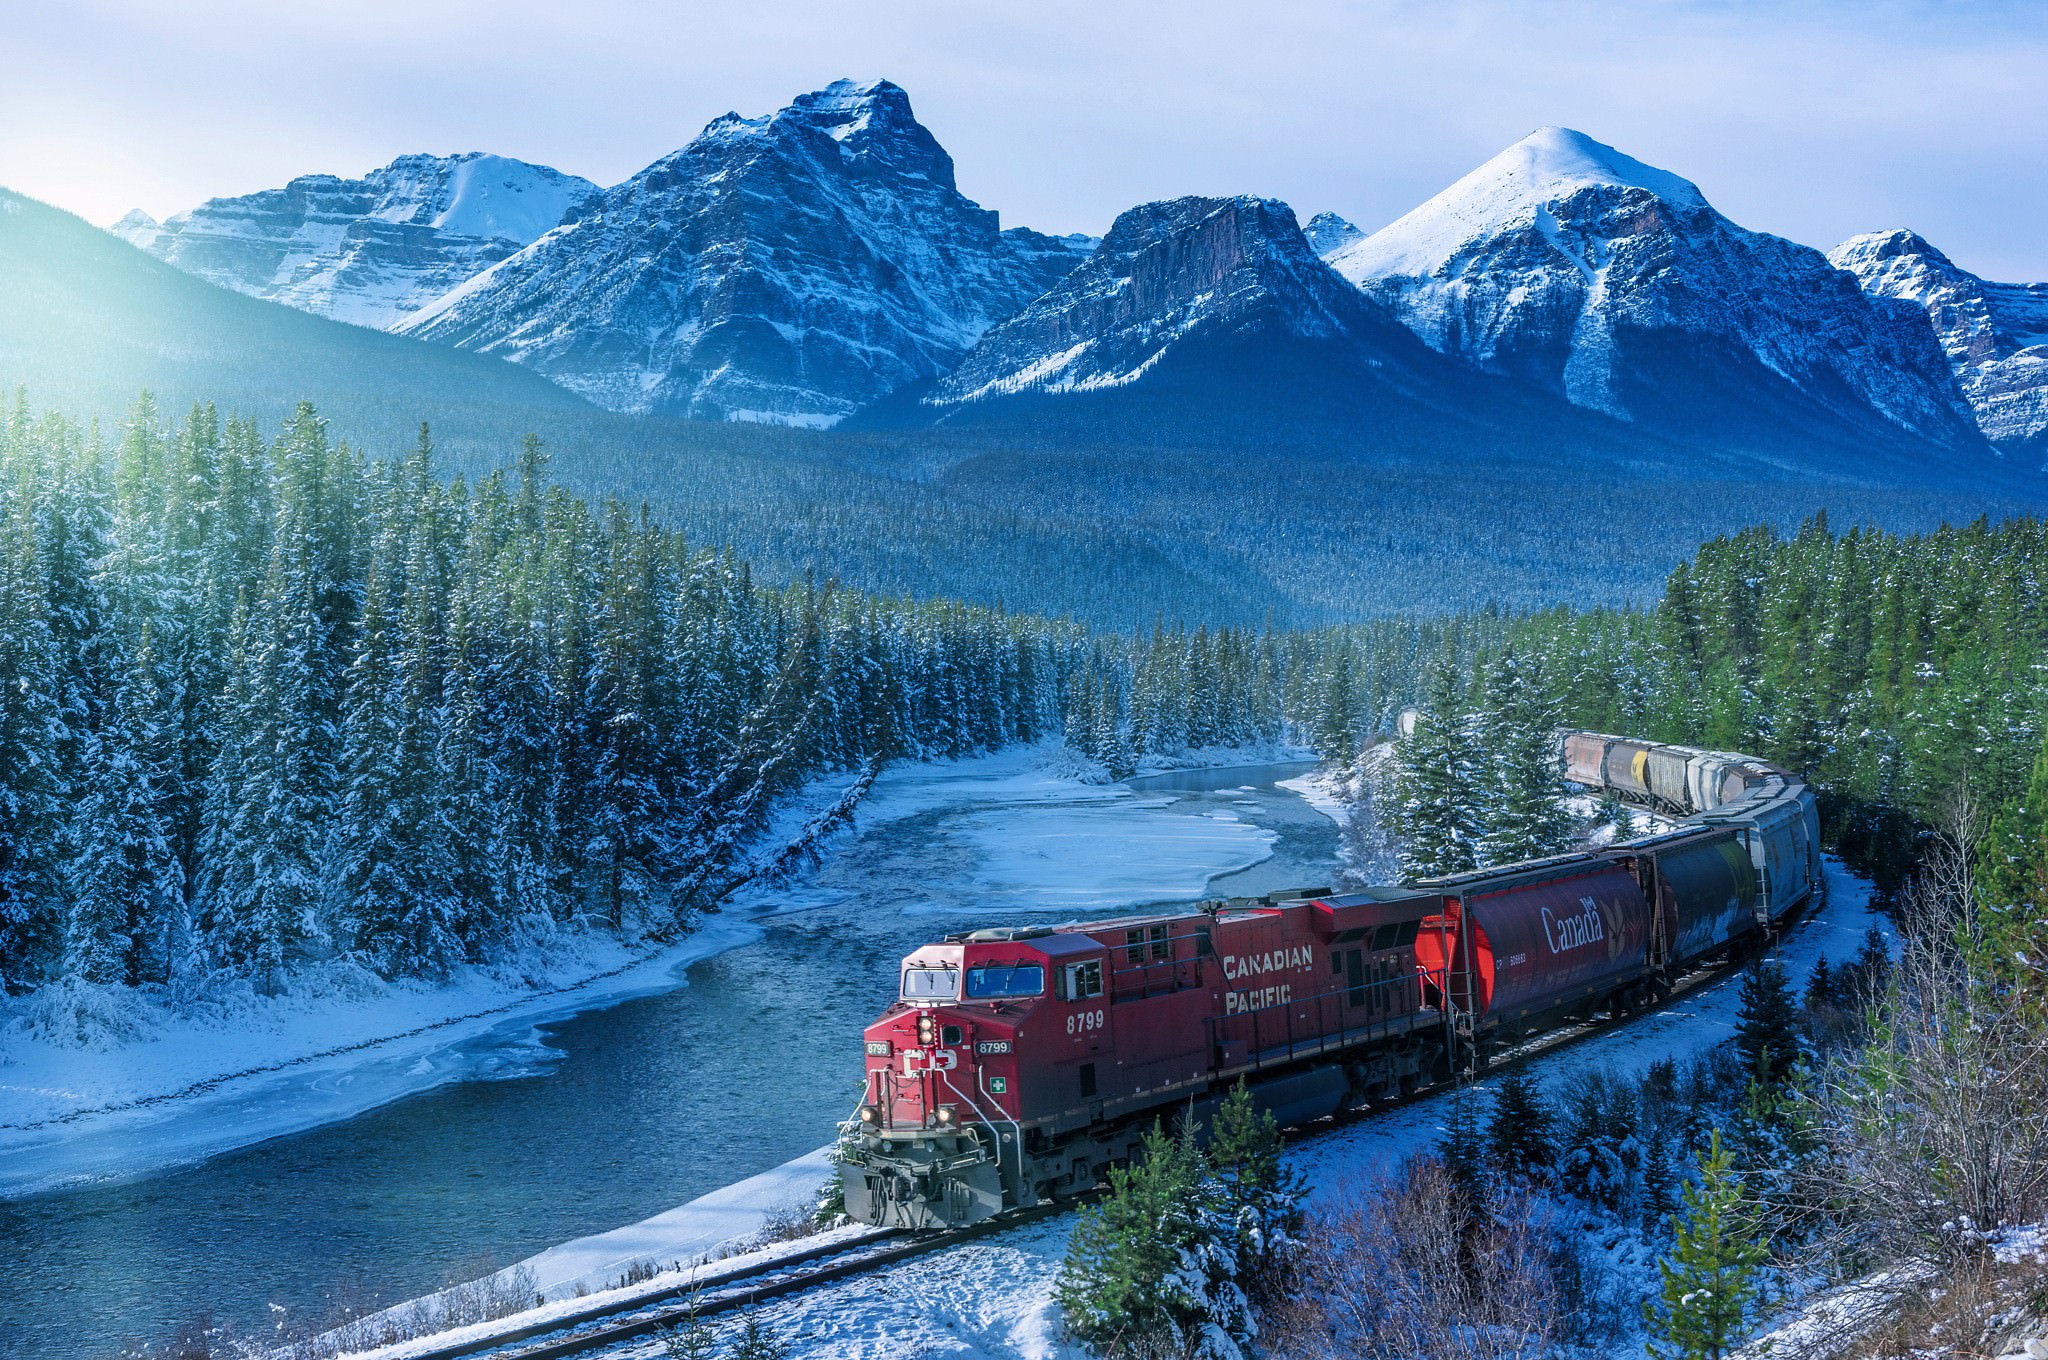 frontera del papel pintado del tren,naturaleza,paisaje natural,montaña,ferrocarril,vehículo